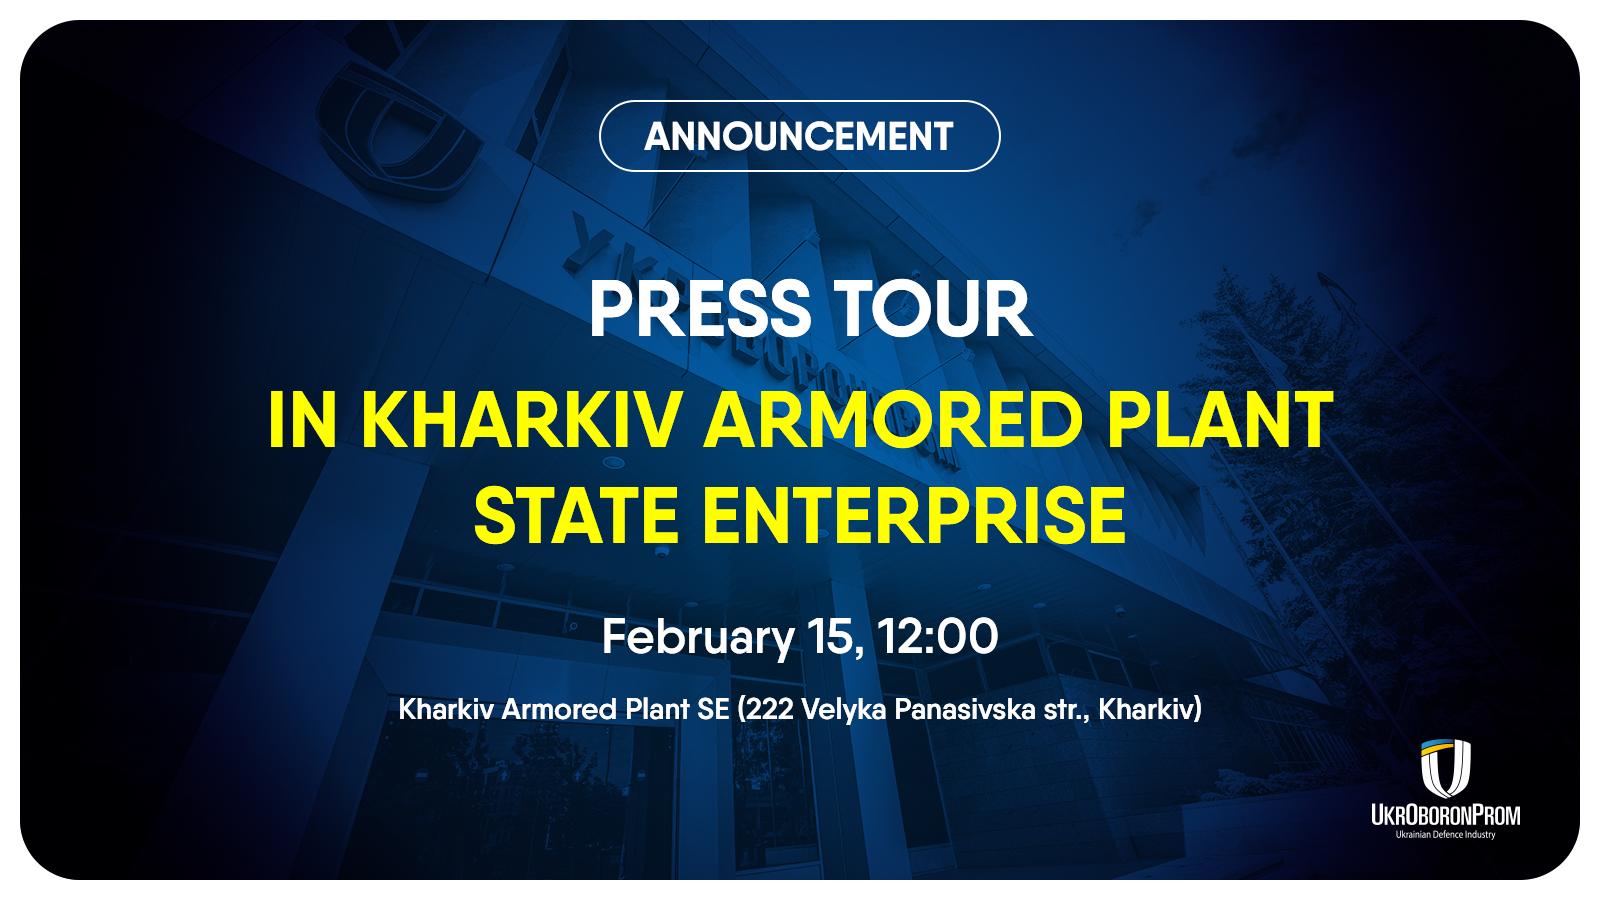 Ukroboronprom invites mass media to a one-day press-tour at Kharkiv Armored Plant